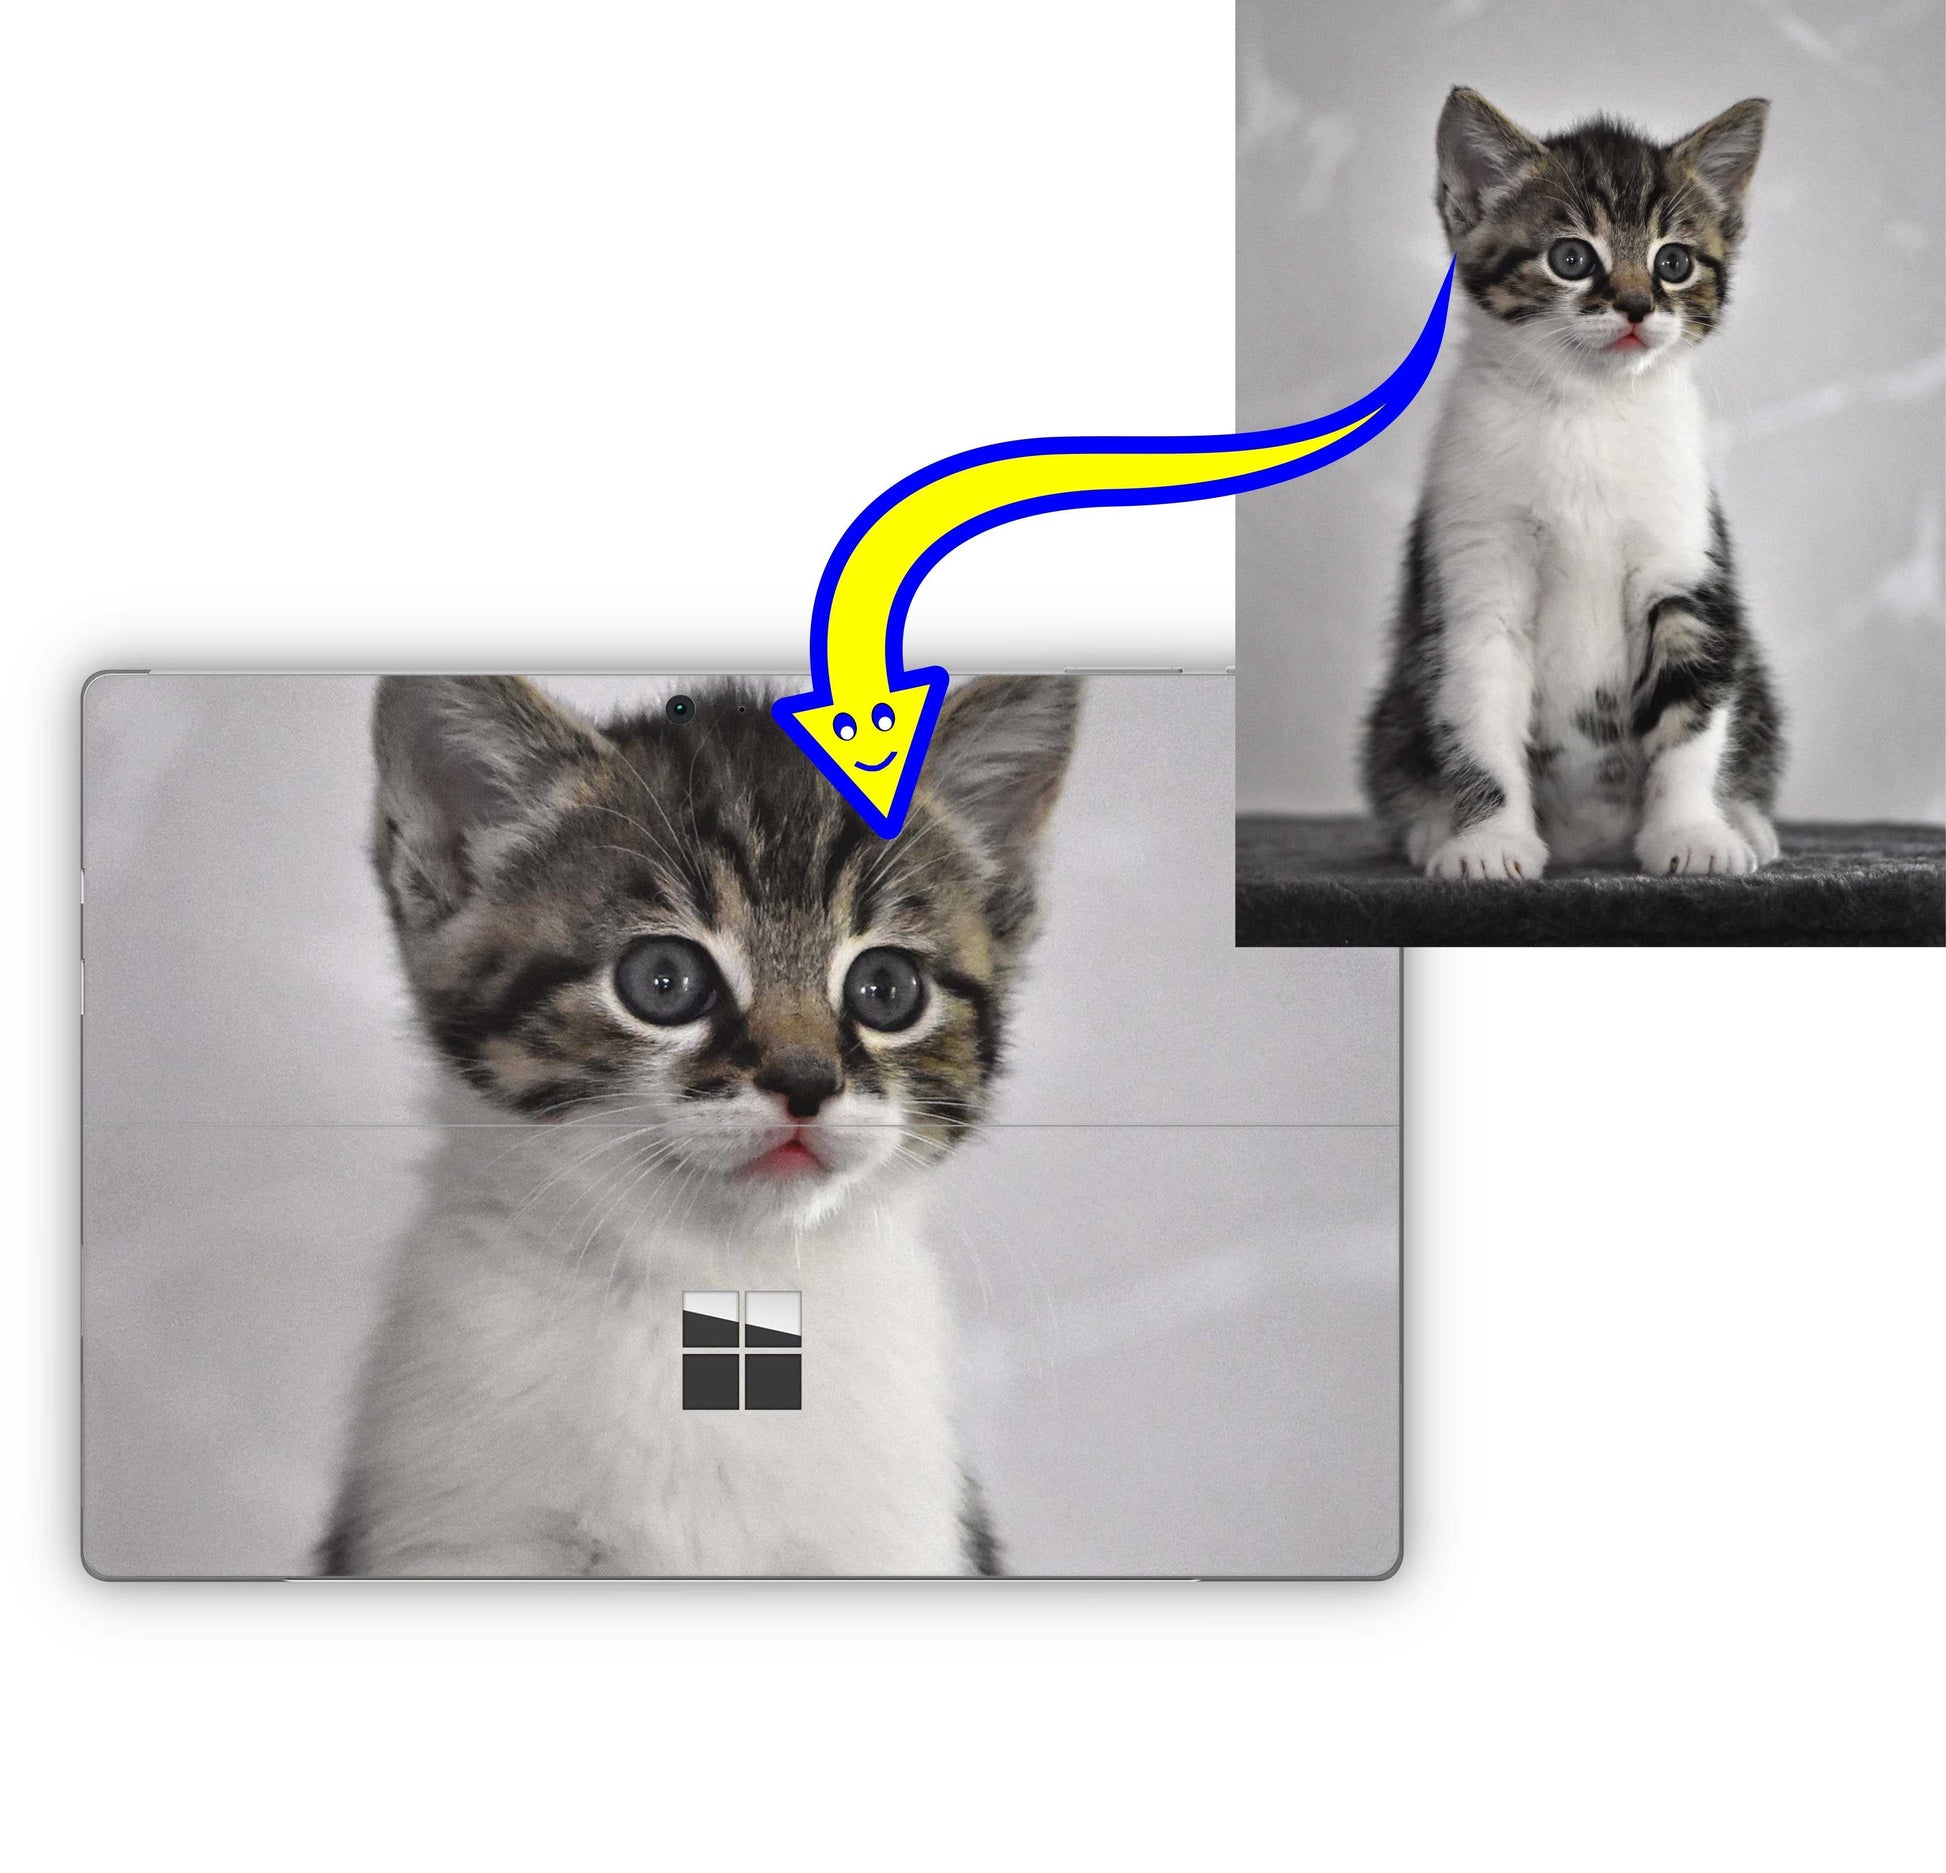 Microsoft Surface Pro X Skins Aufkleber selbst gestalten individuell Wunschbild cpb_product Skins4u   